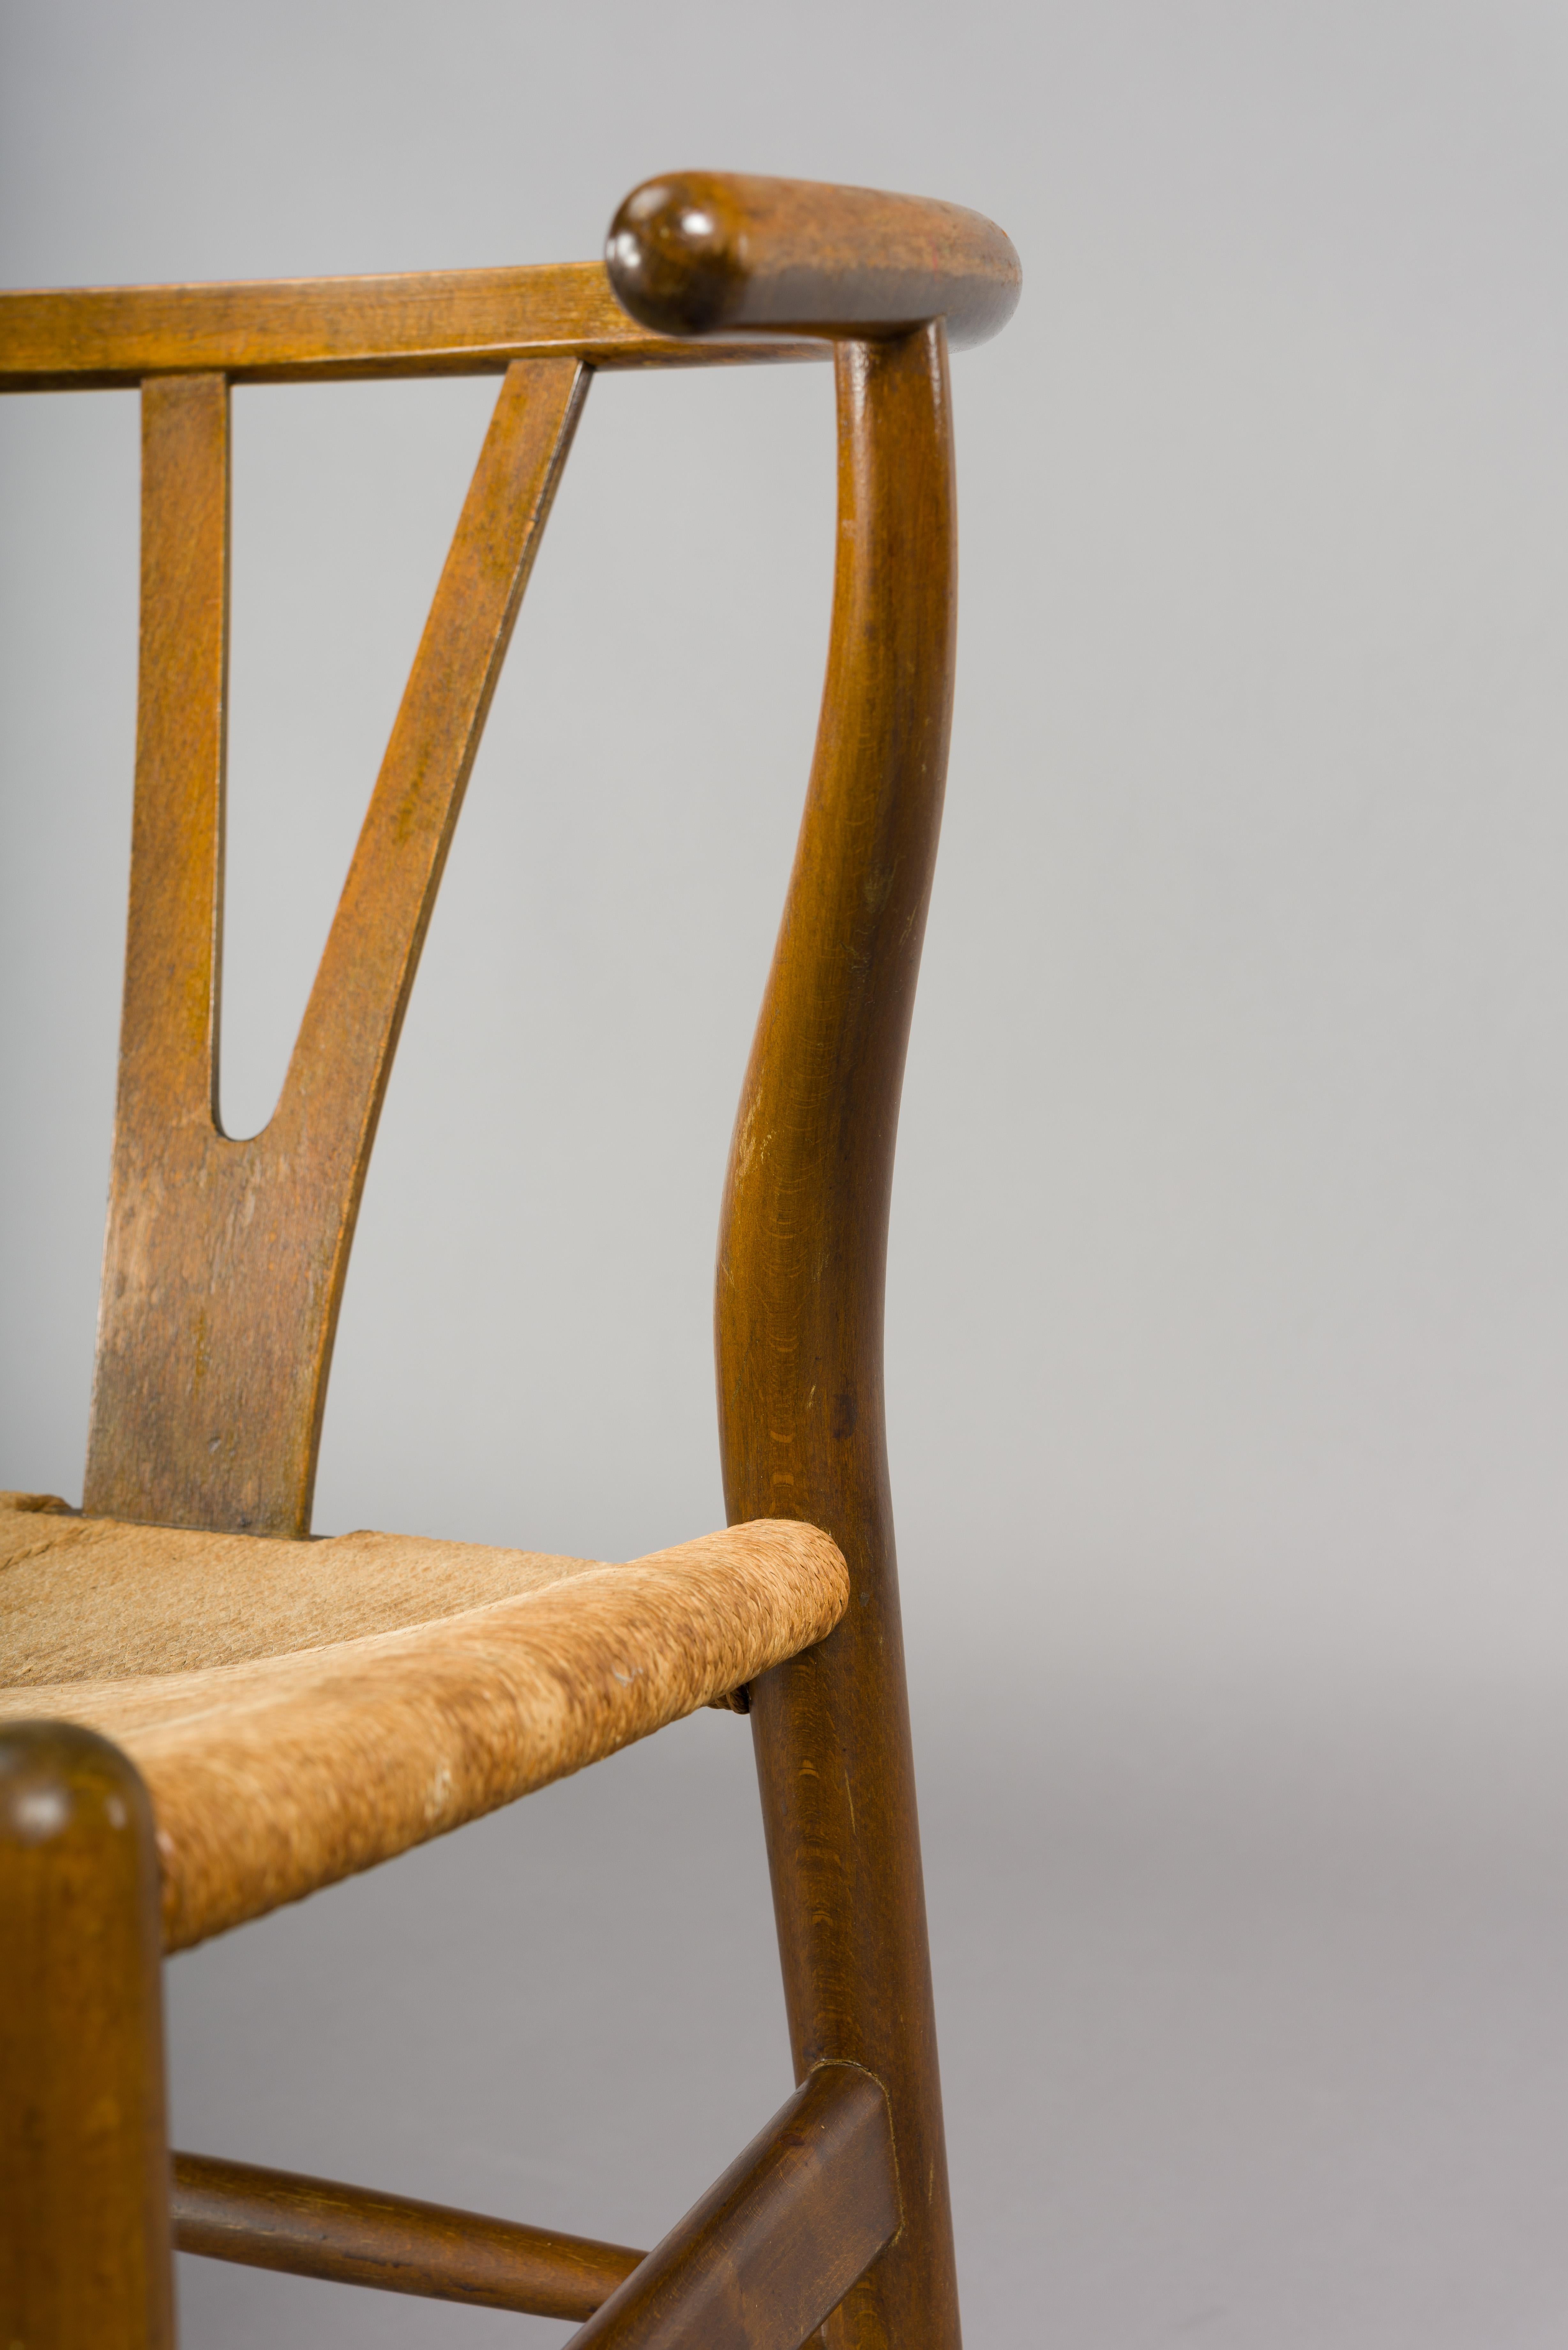 Midcentury CH24 Wishbone Chairs by Hans J. Wegner for Carl Hansen & Søn Made in 6